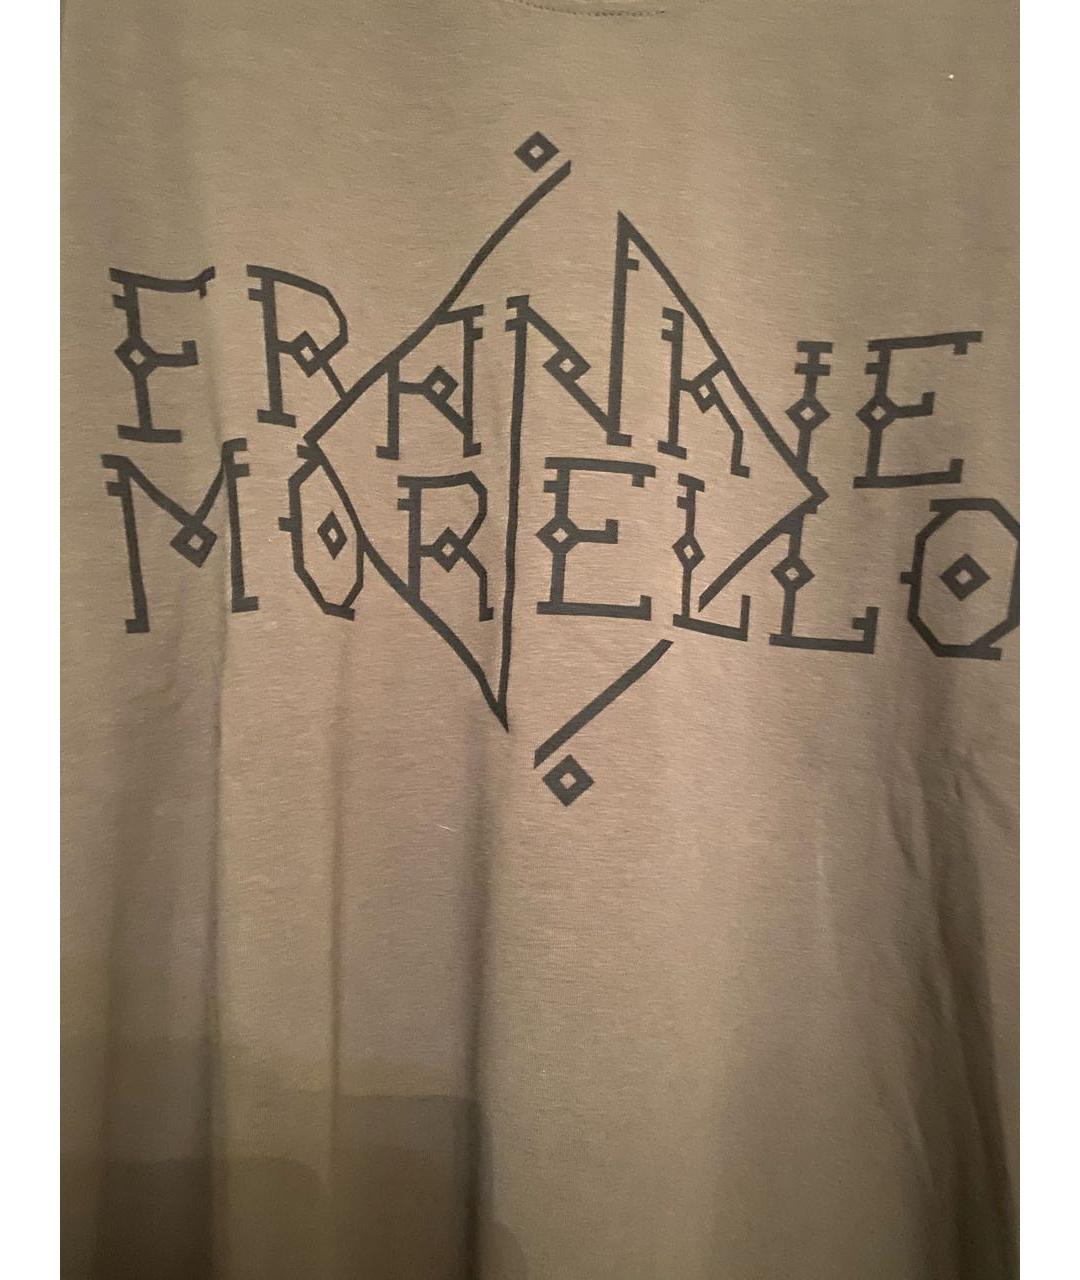 FRANKIE MORELLO Хаки хлопковая футболка, фото 4